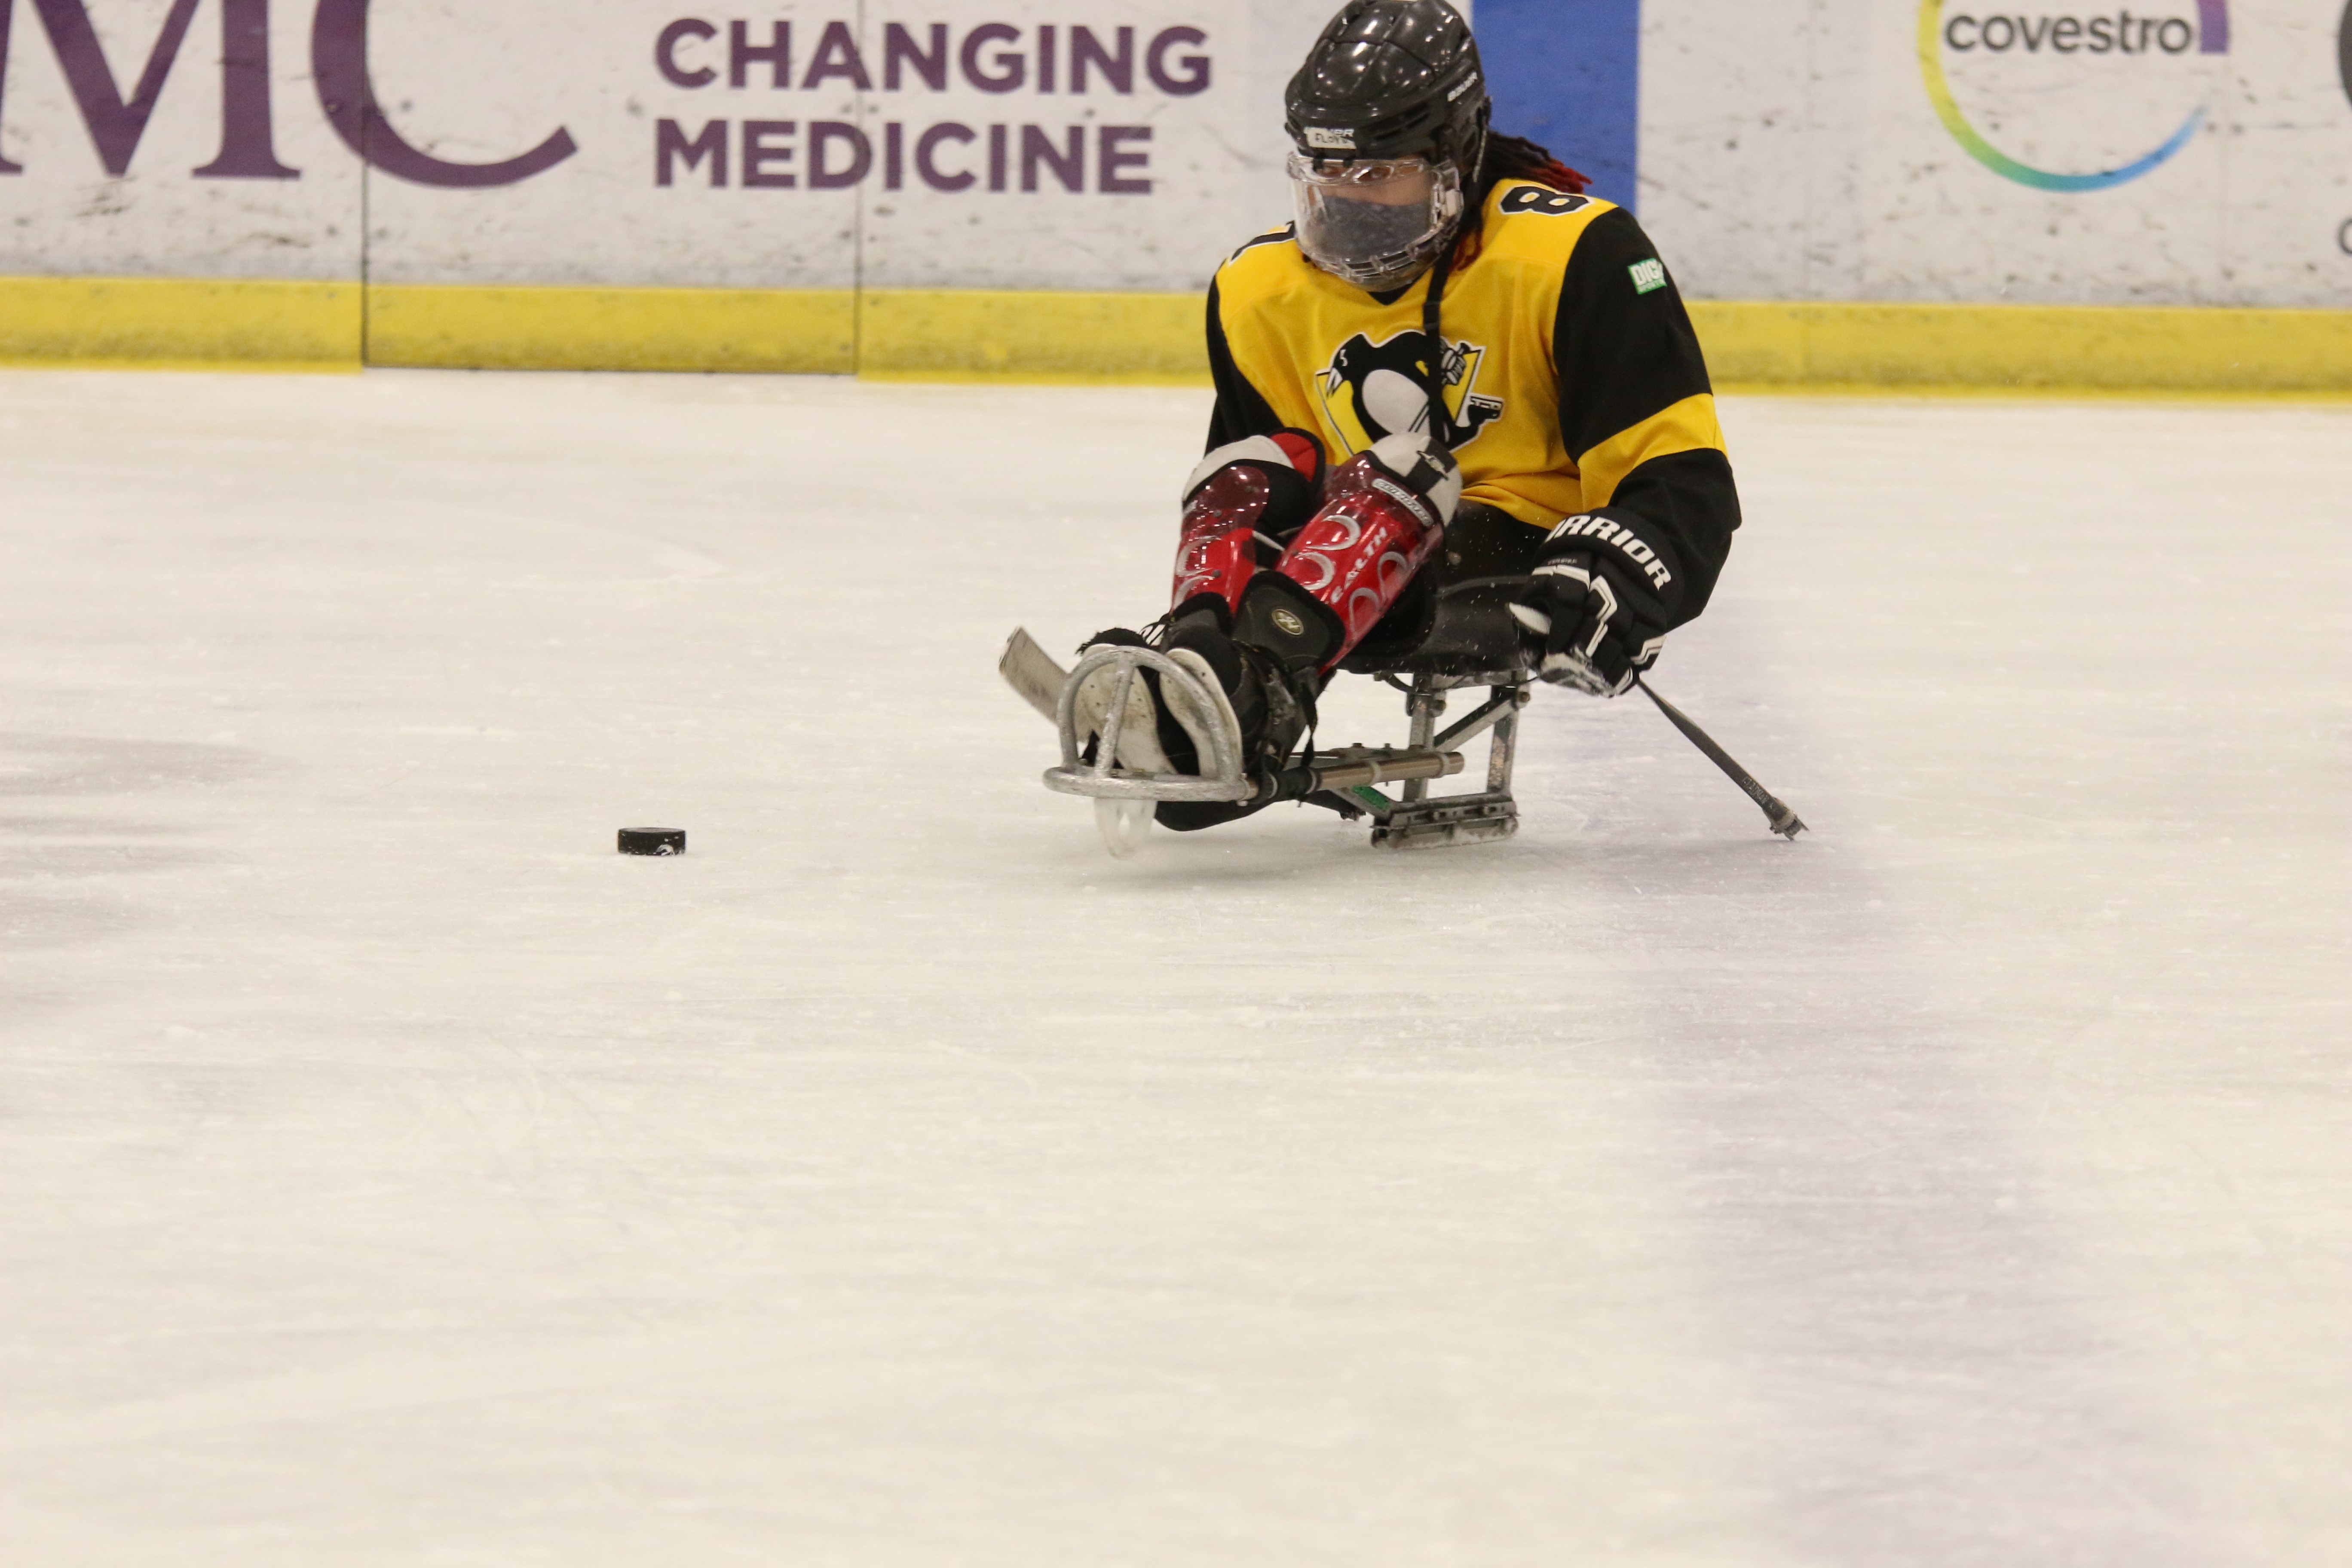 A sled hockey player skates across ice towards the puck